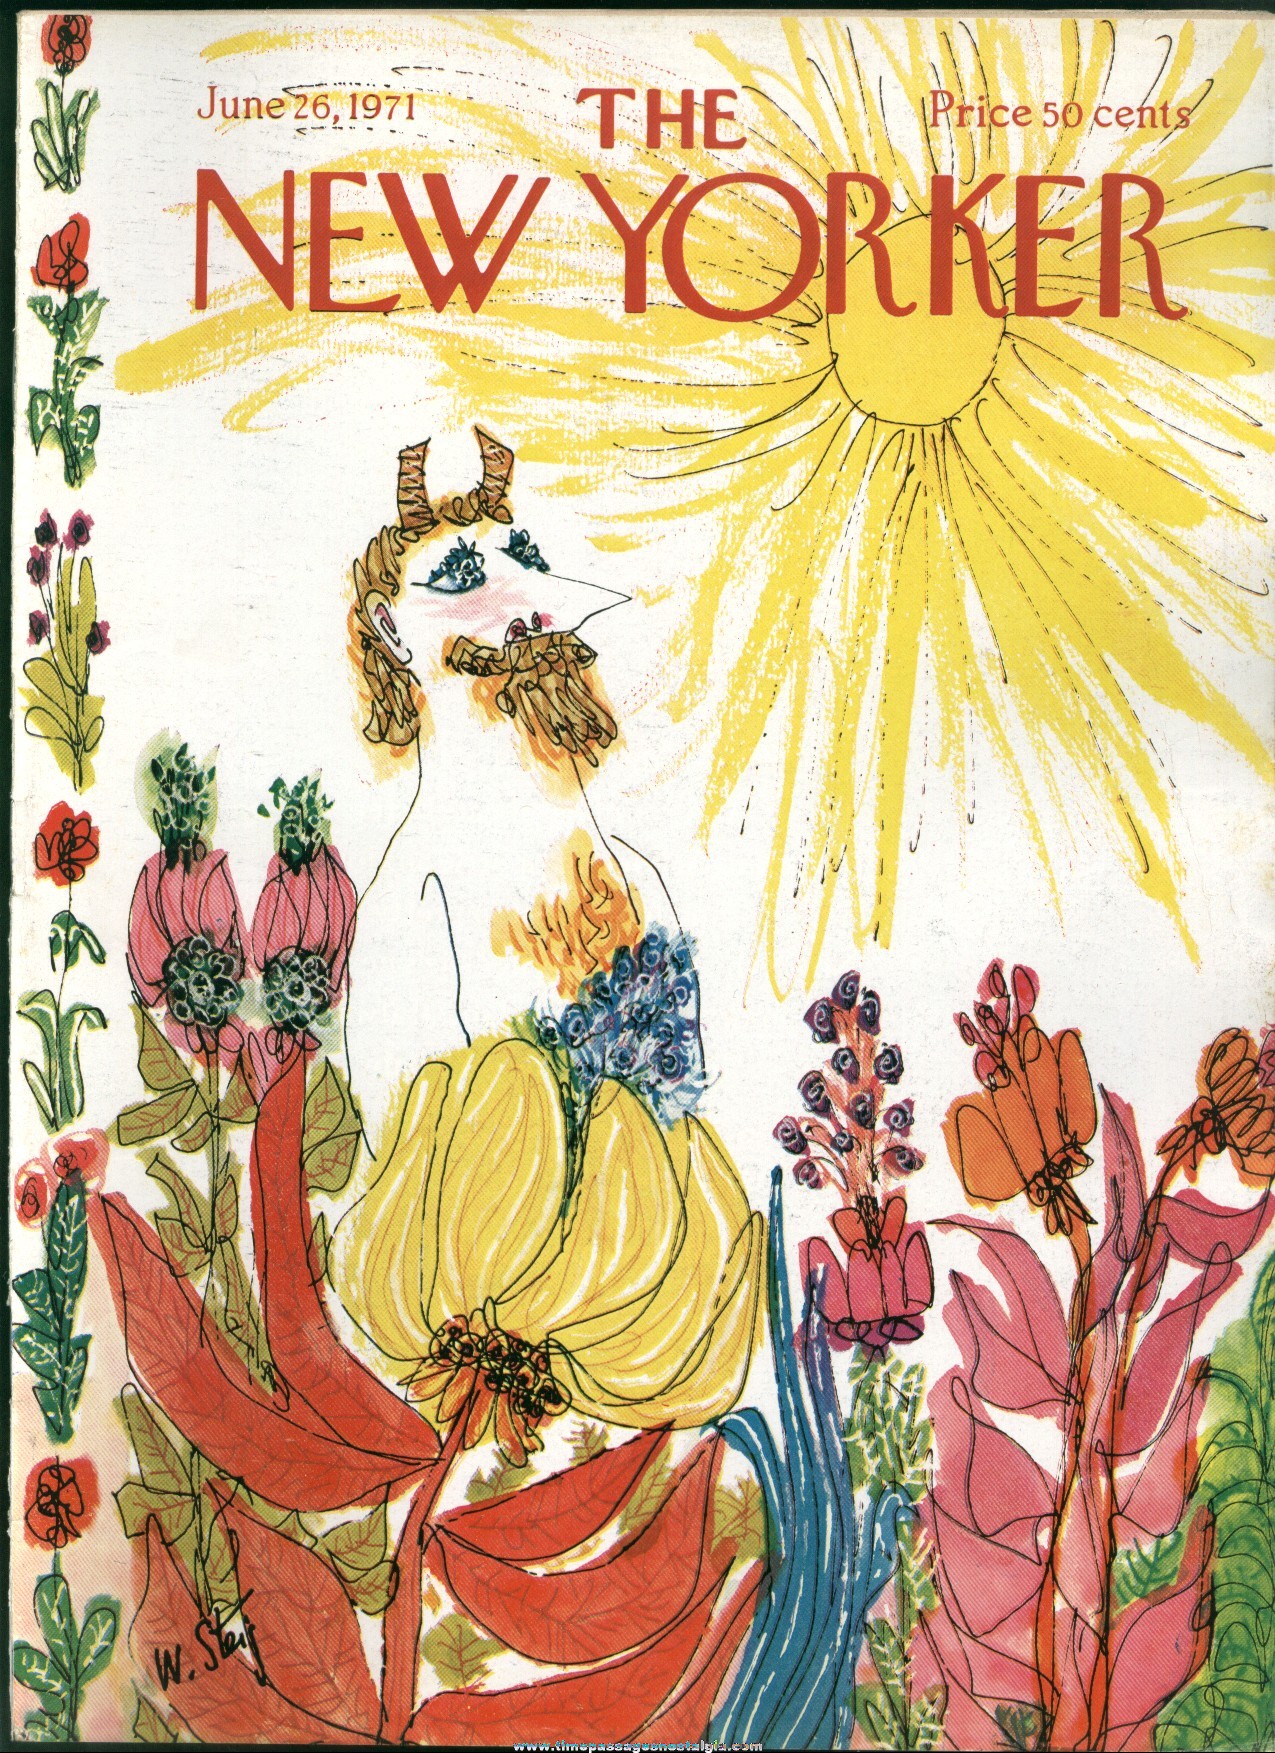 New Yorker Magazine - June 26, 1971 - Cover by William Steig